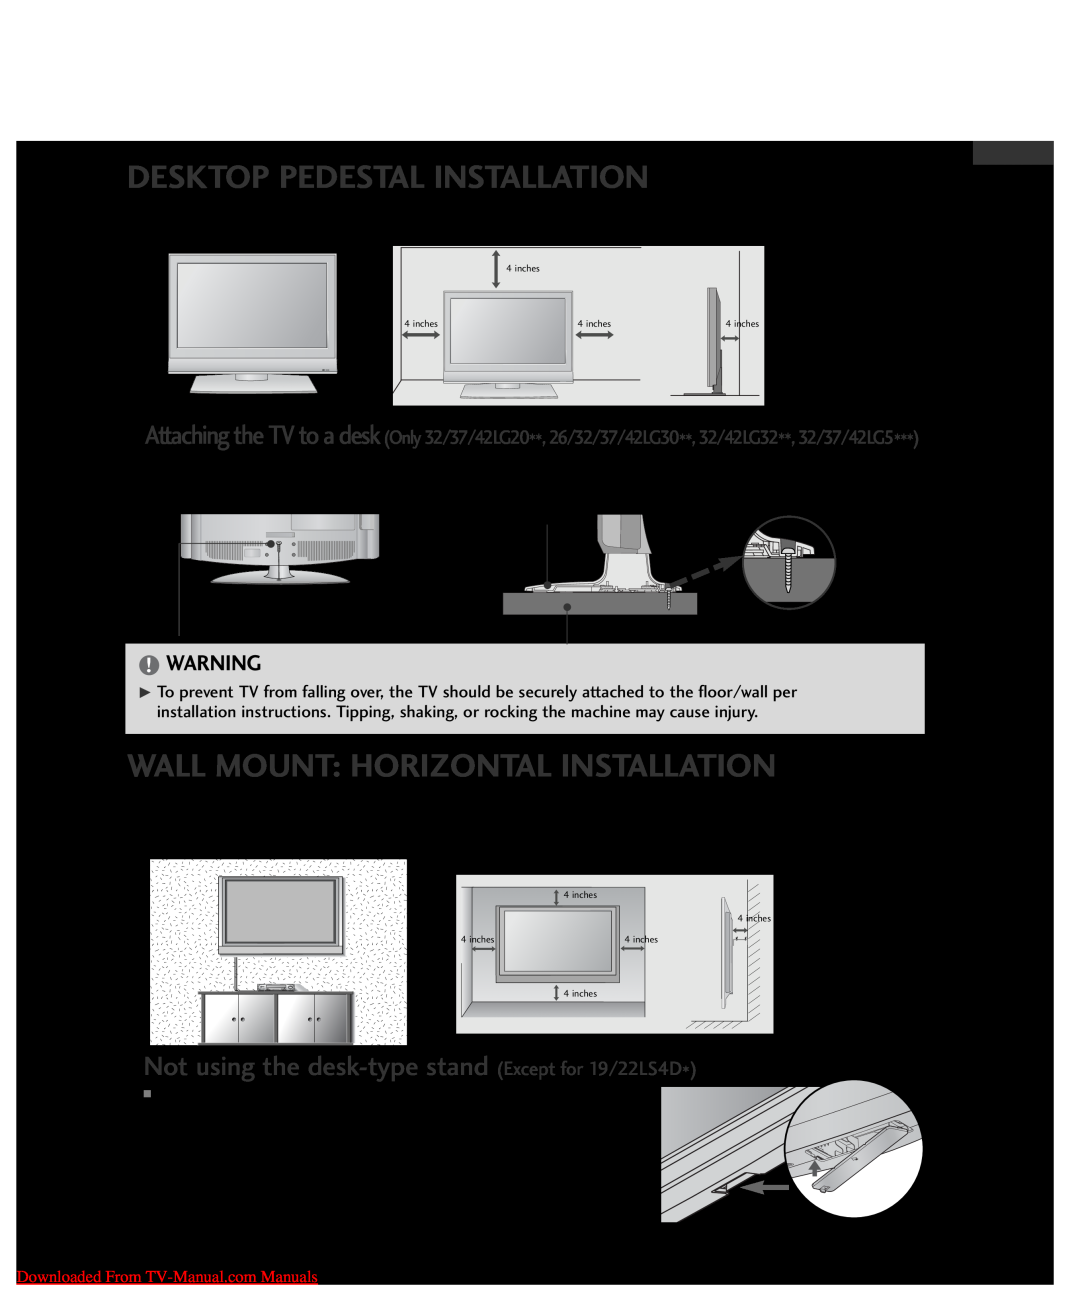 LG Electronics 26LG3000-ZA, 32LG3000-ZA Desktop Pedestal Installation, Wall Mount Horizontal Installation, English 